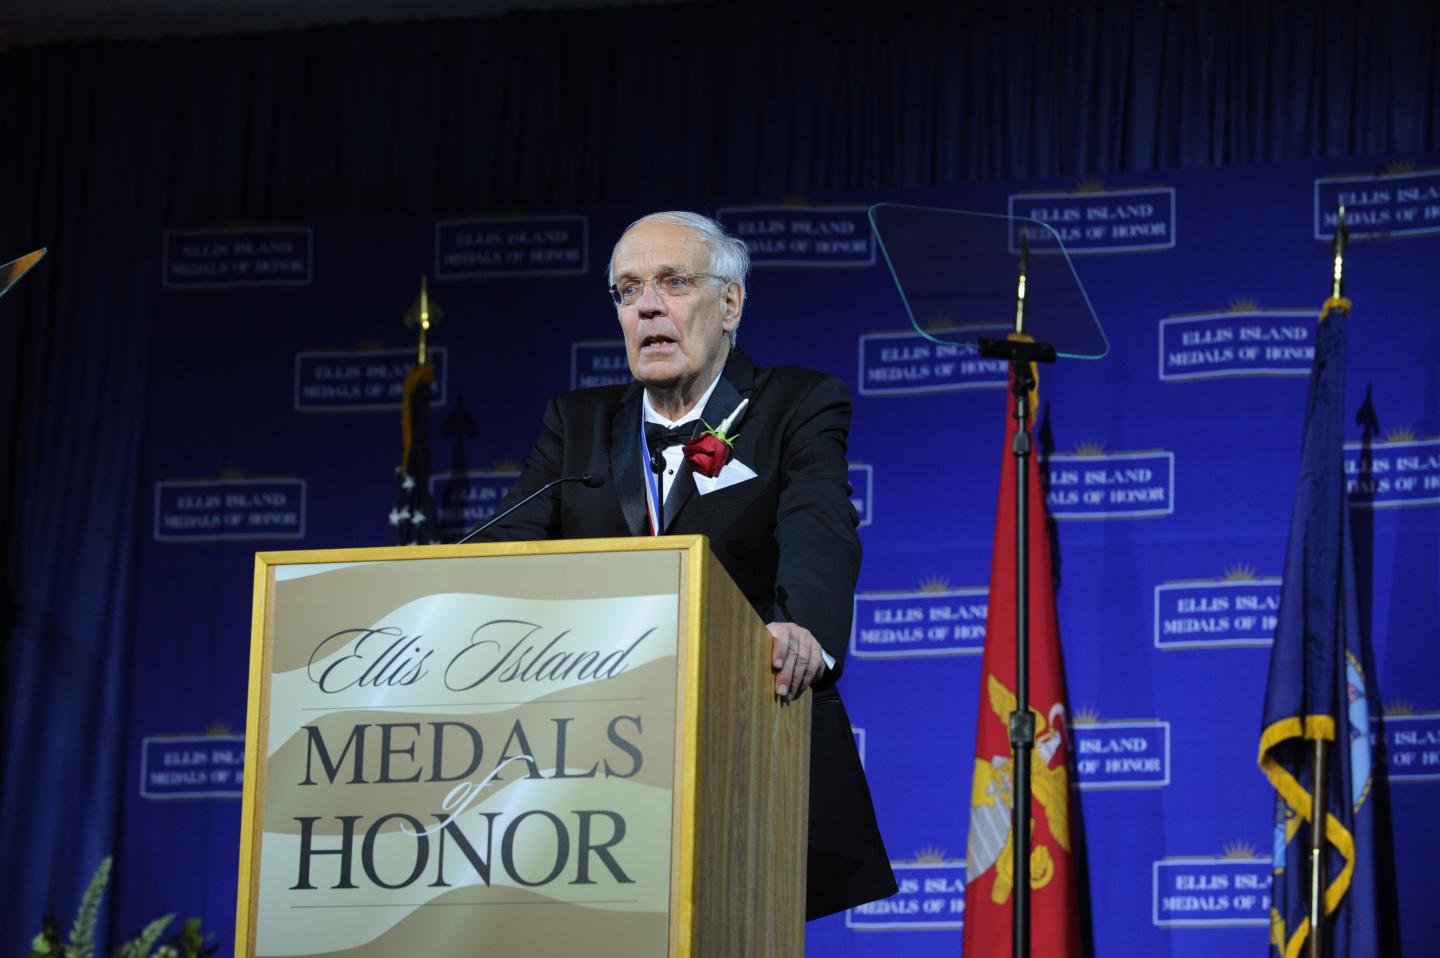 Bert Sakmann at Ellis Island Medal of Honor